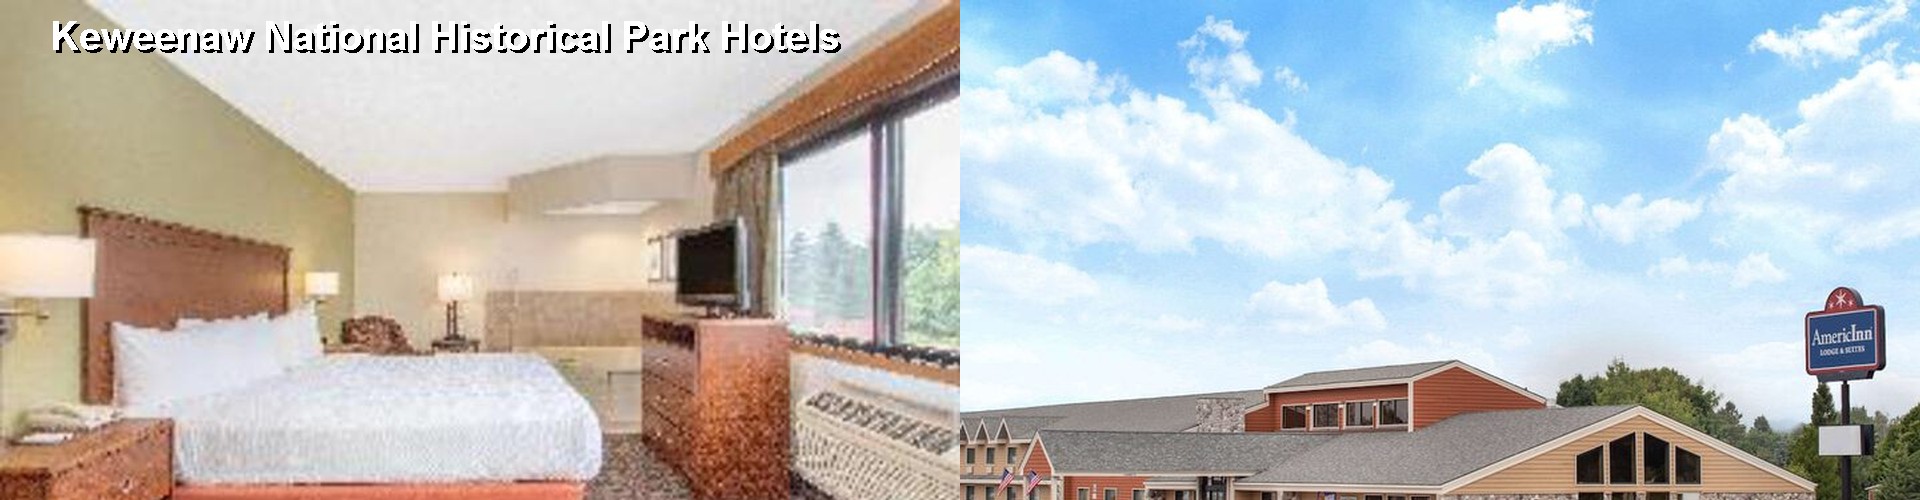 5 Best Hotels near Keweenaw National Historical Park